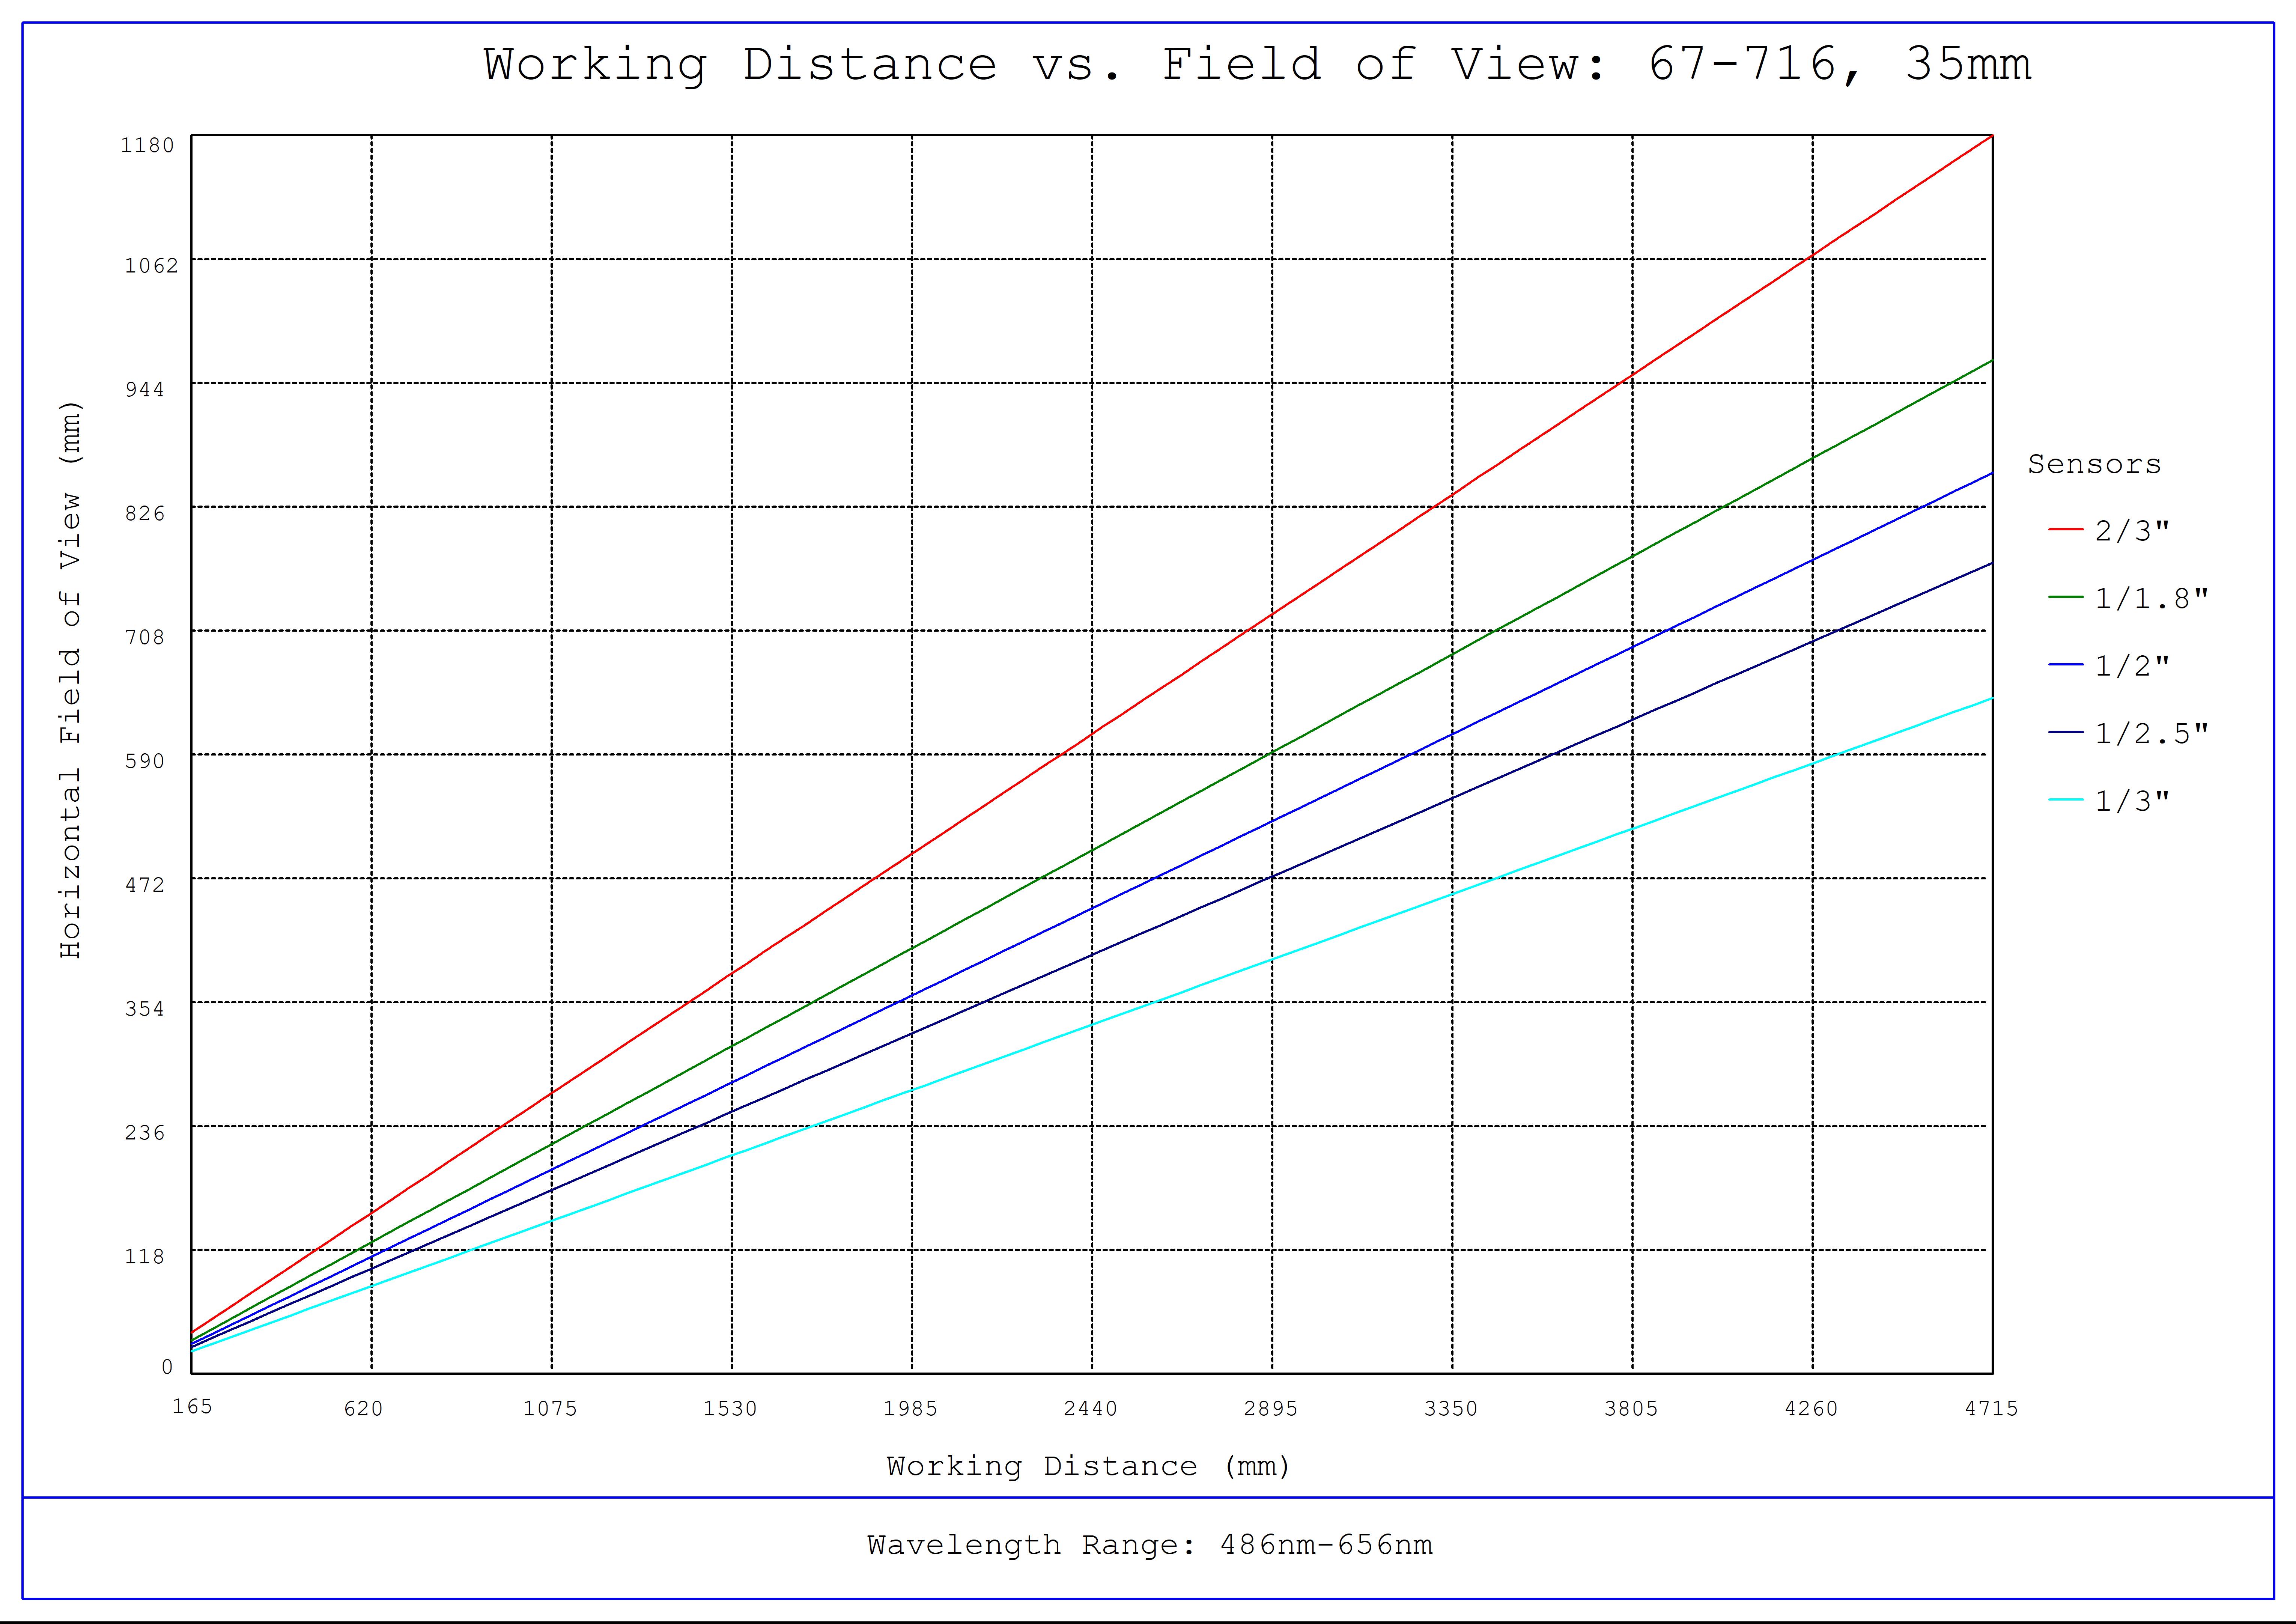 #67-716, 35mm C VIS-NIR Series Fixed Focal Length Lens, Working Distance versus Field of View Plot